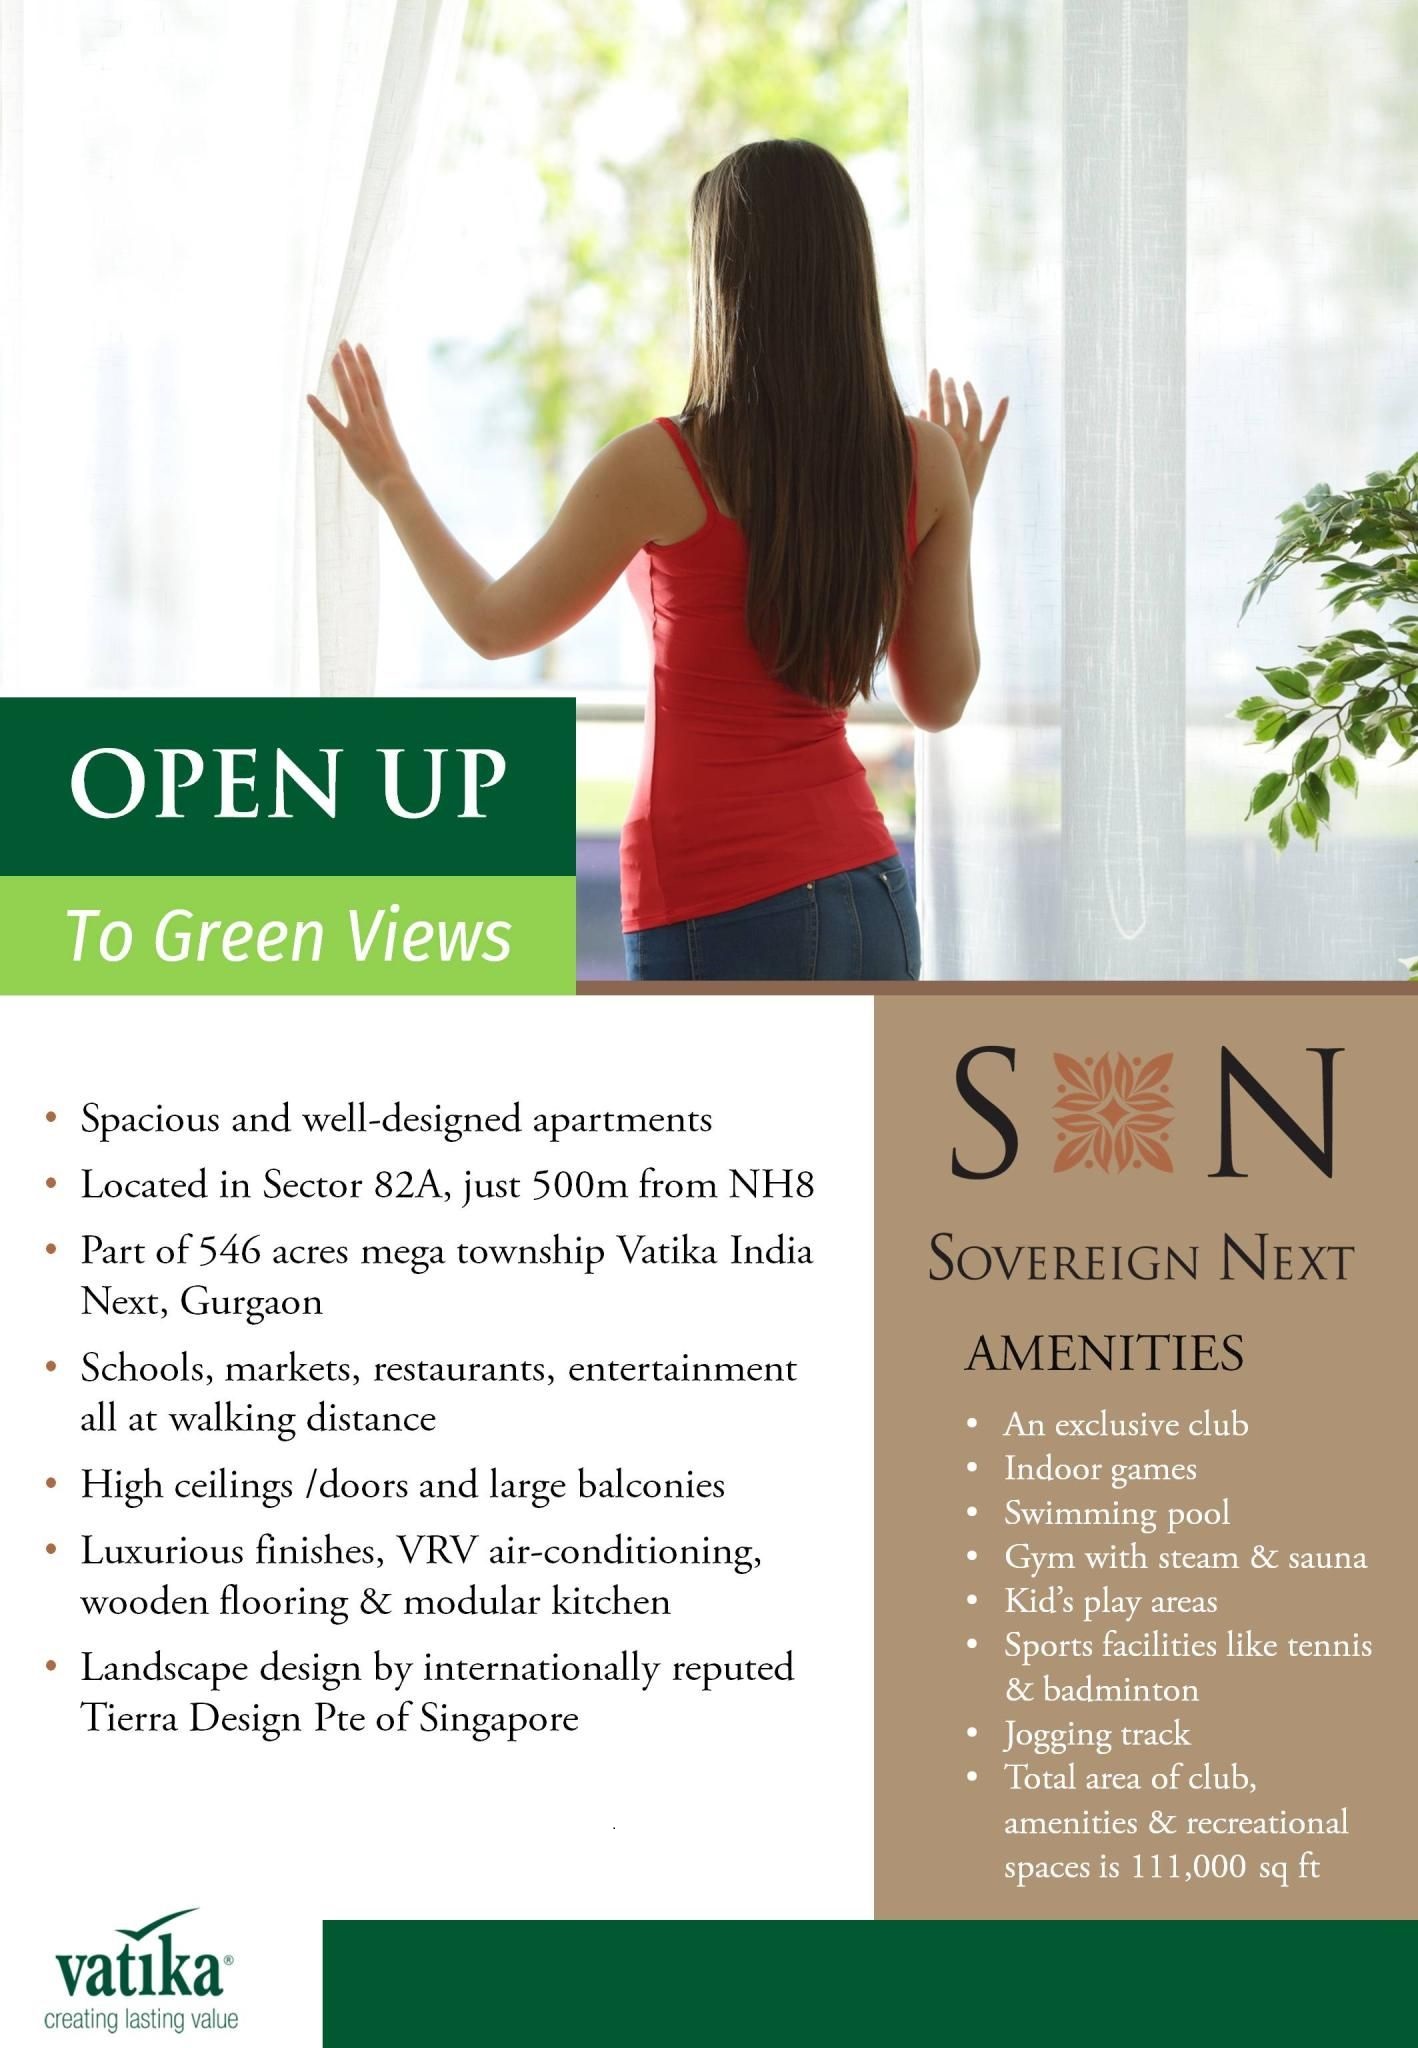 Open up to green views at Vatika Sovereign Next, Gurgaon Update